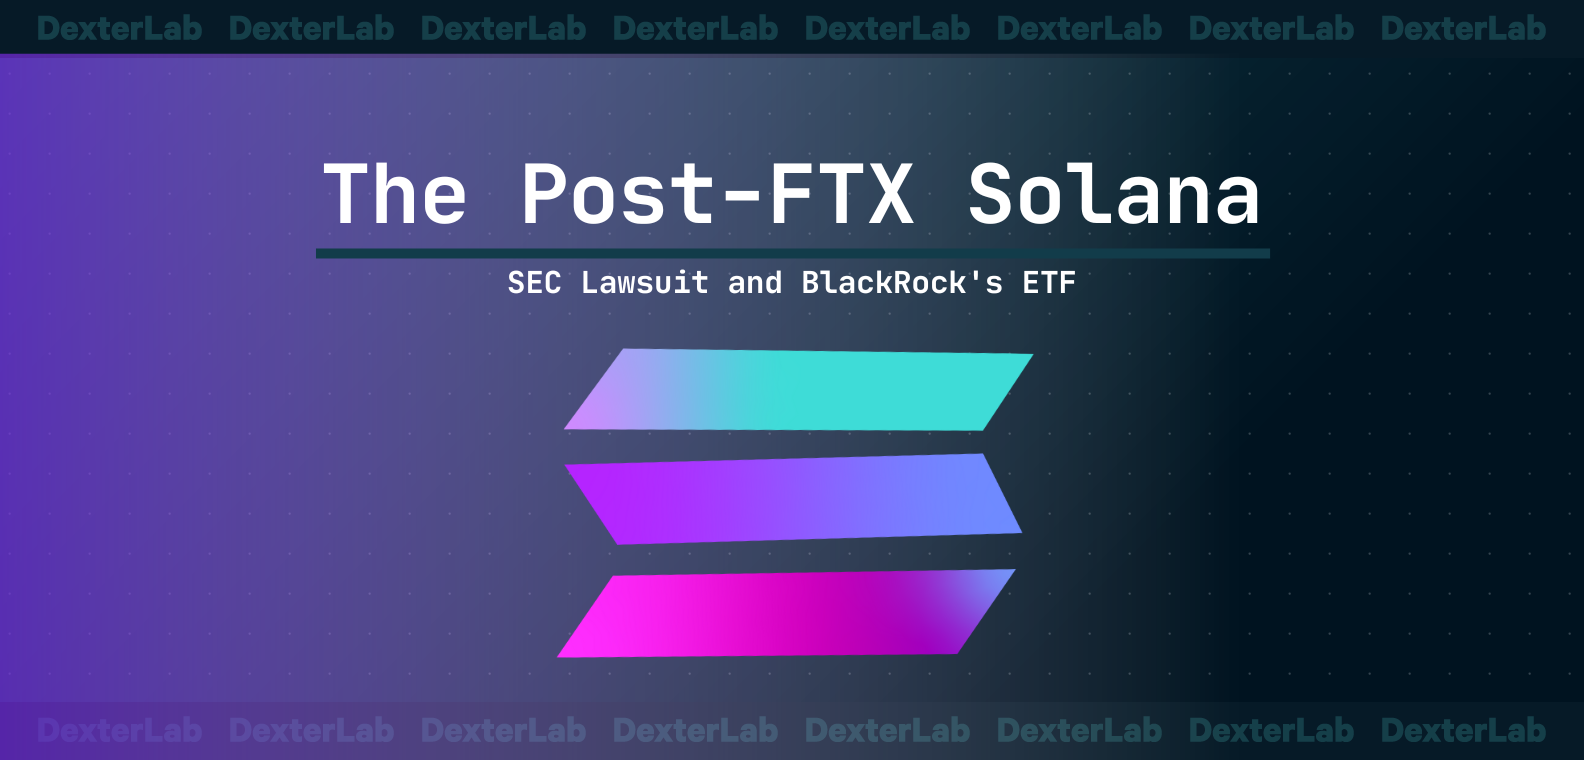 The Post-FTX Solana: SEC Lawsuit and BlackRock's ETF